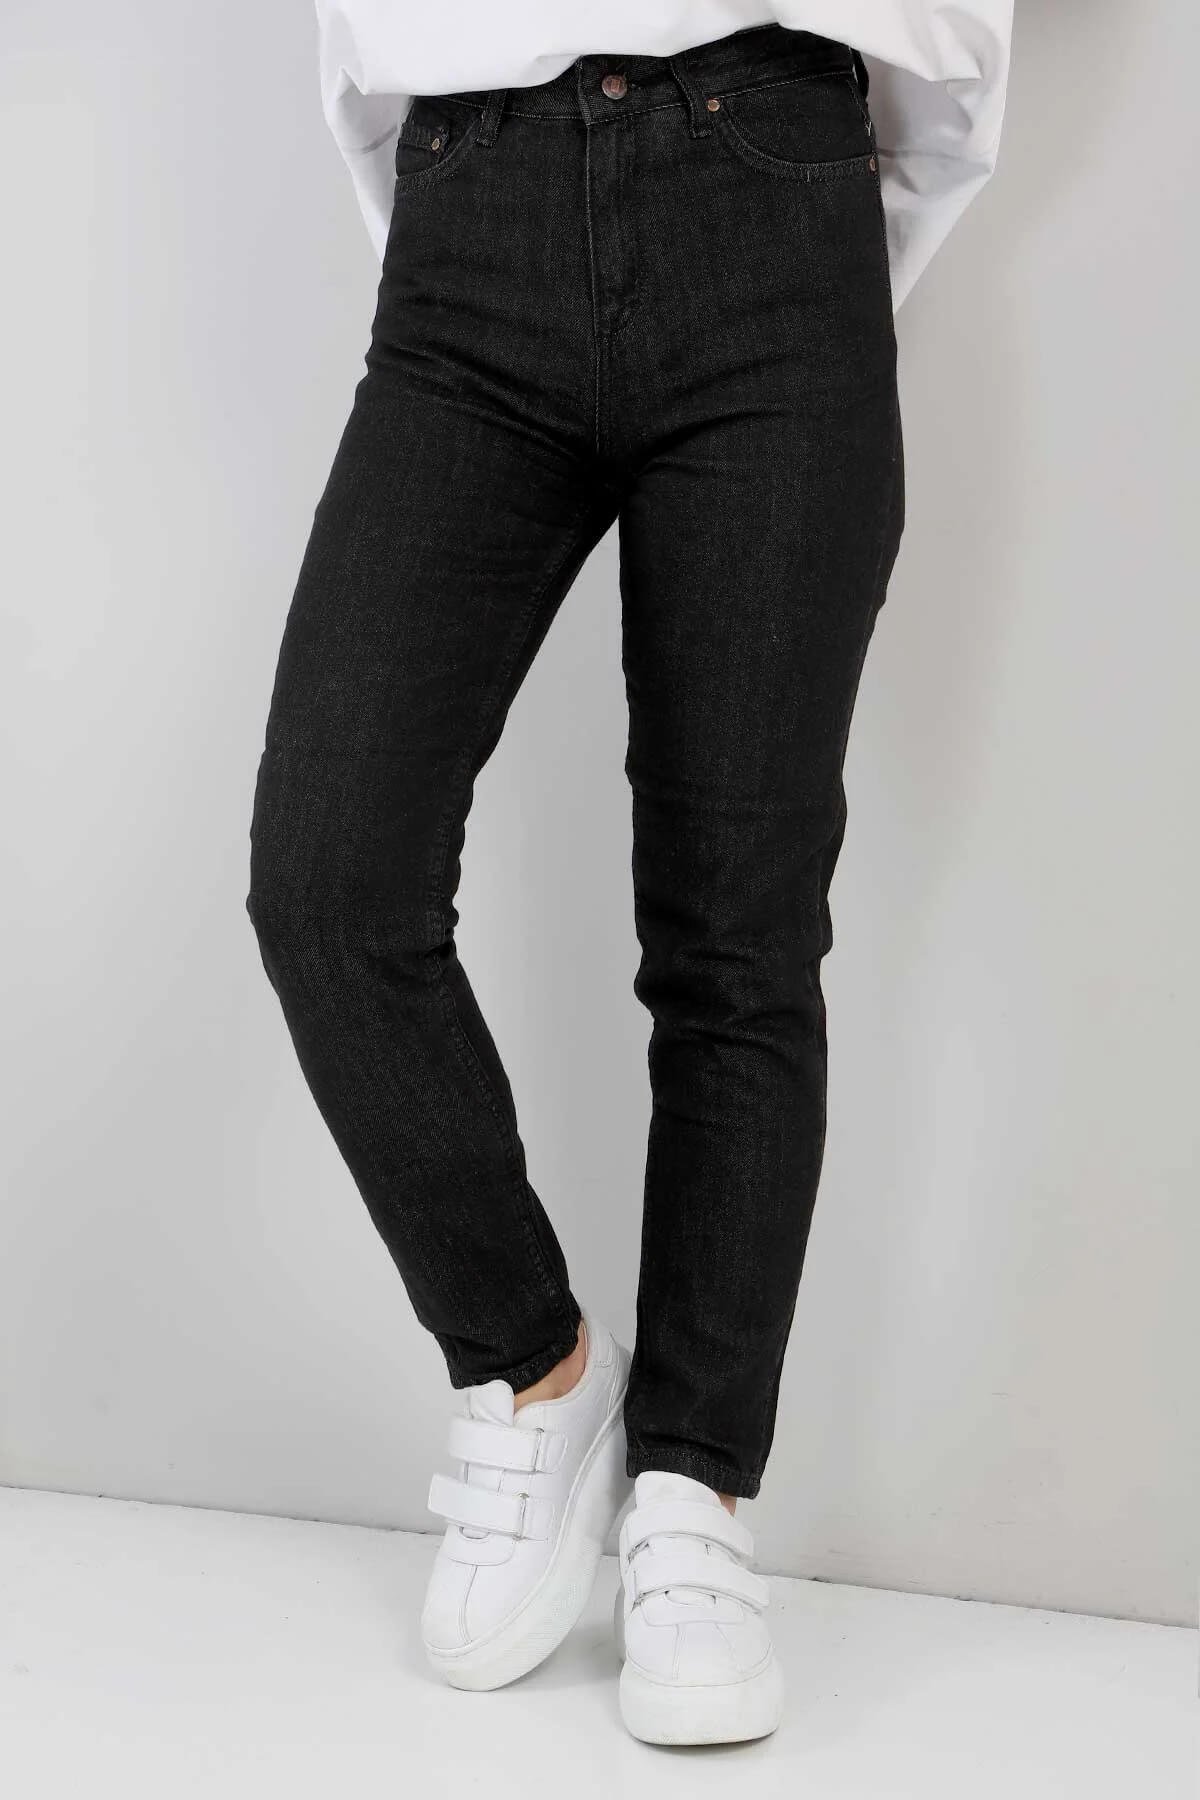 Siyah Kot Pantolon TSD211243 Siyah